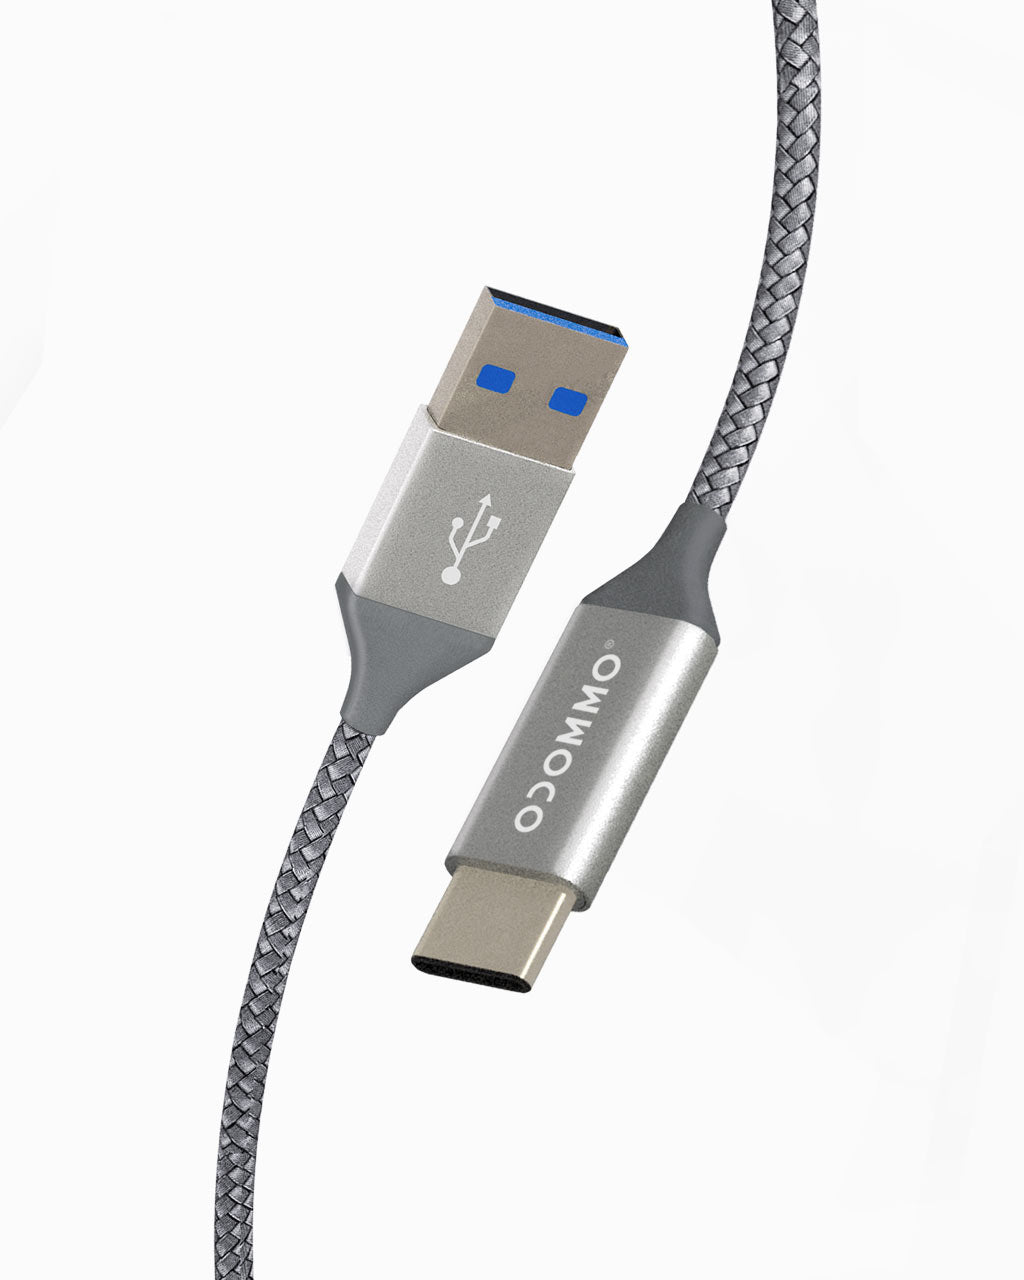 Cable USB C a USB C (Nylon_1,5m.) - TM Electron